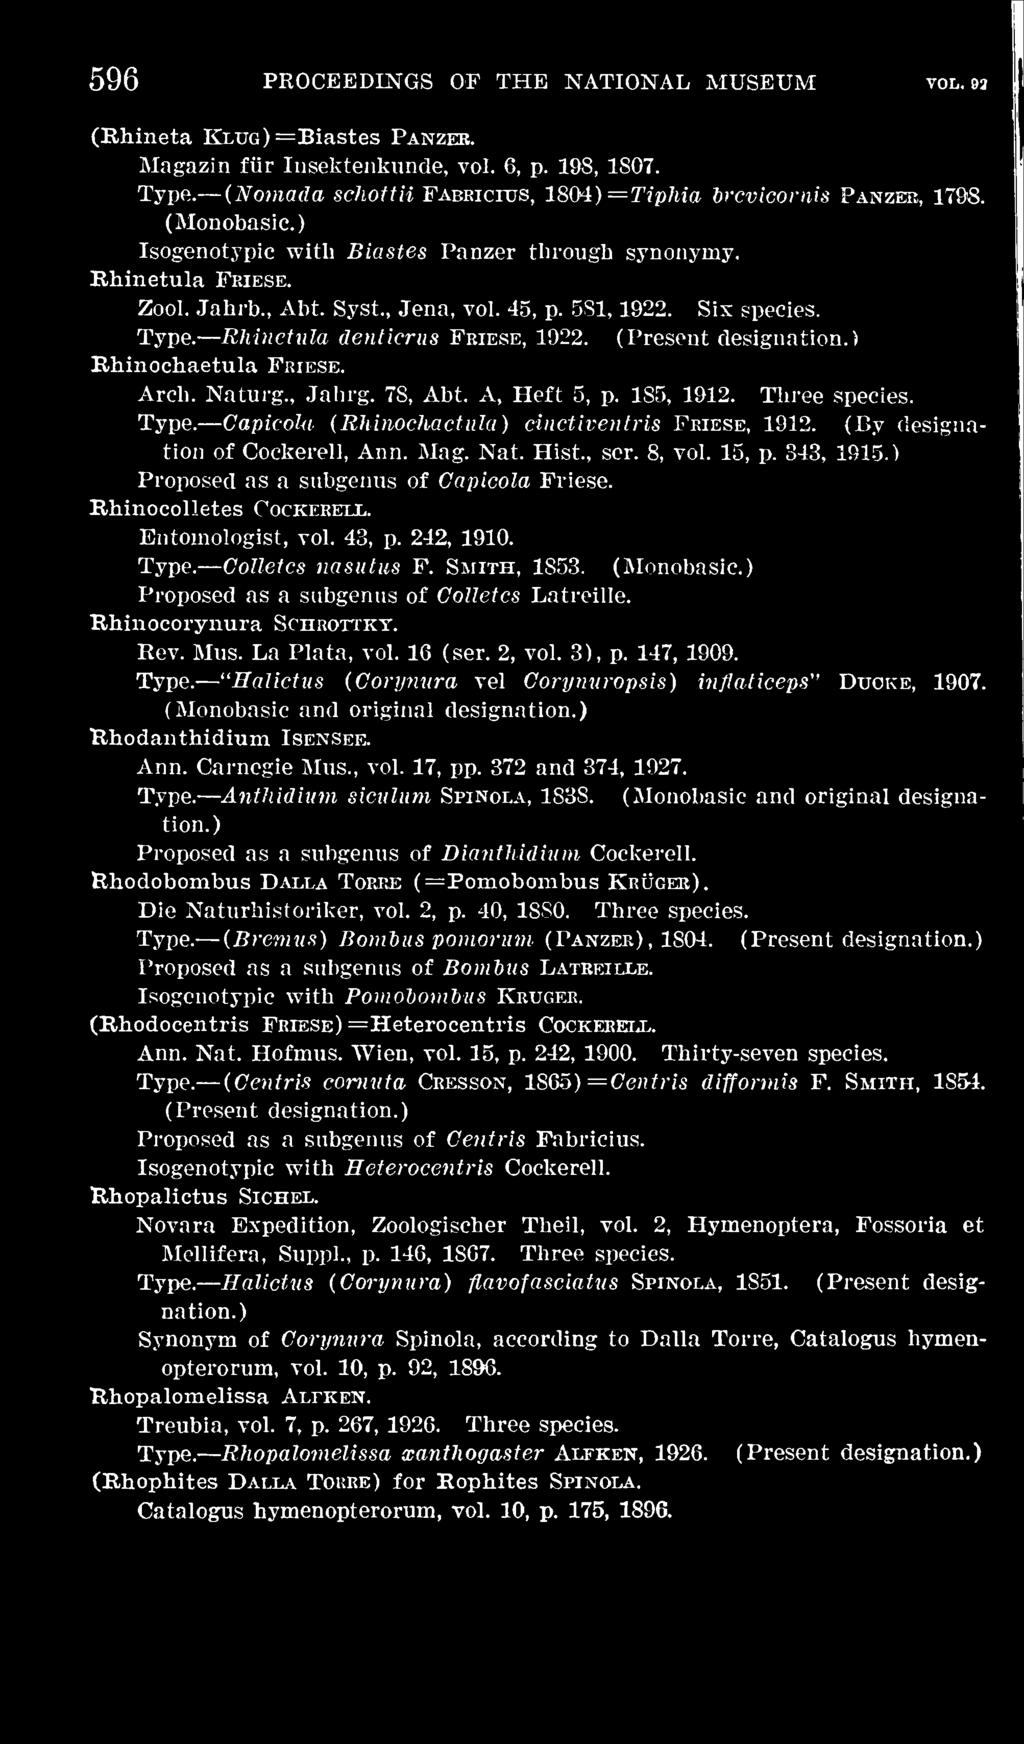 ) Proposed as a subgenus of CoUetcs Latreille. Rhinocorynura Schrottky. Rev. Mus. La Plata, vol. 16 (ser. 2, vol. 3), p. 147, 1909. "Hnlictns {Corijnnra vel Corynuropsis) inflaticeps" Duoke, 1907.